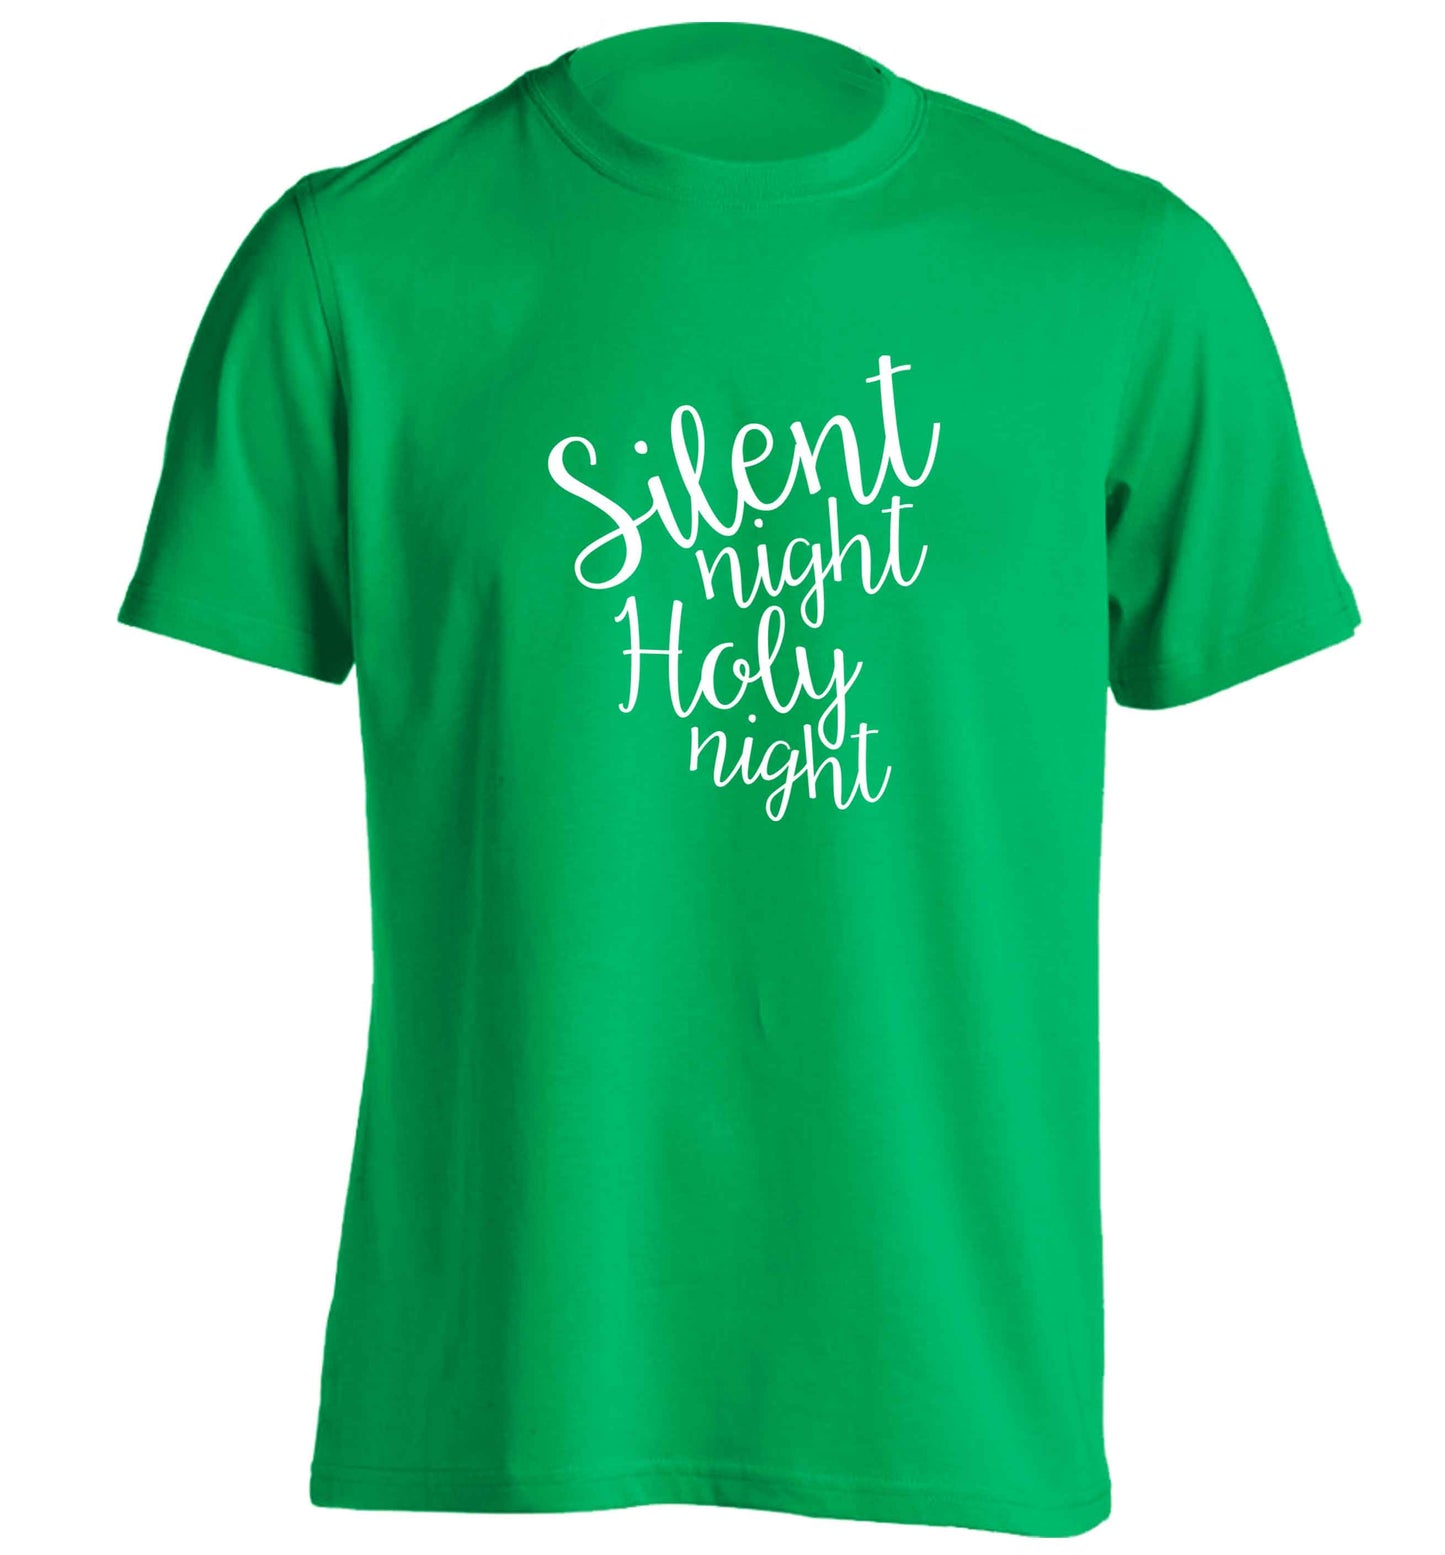 Silent night holy night adults unisex green Tshirt 2XL